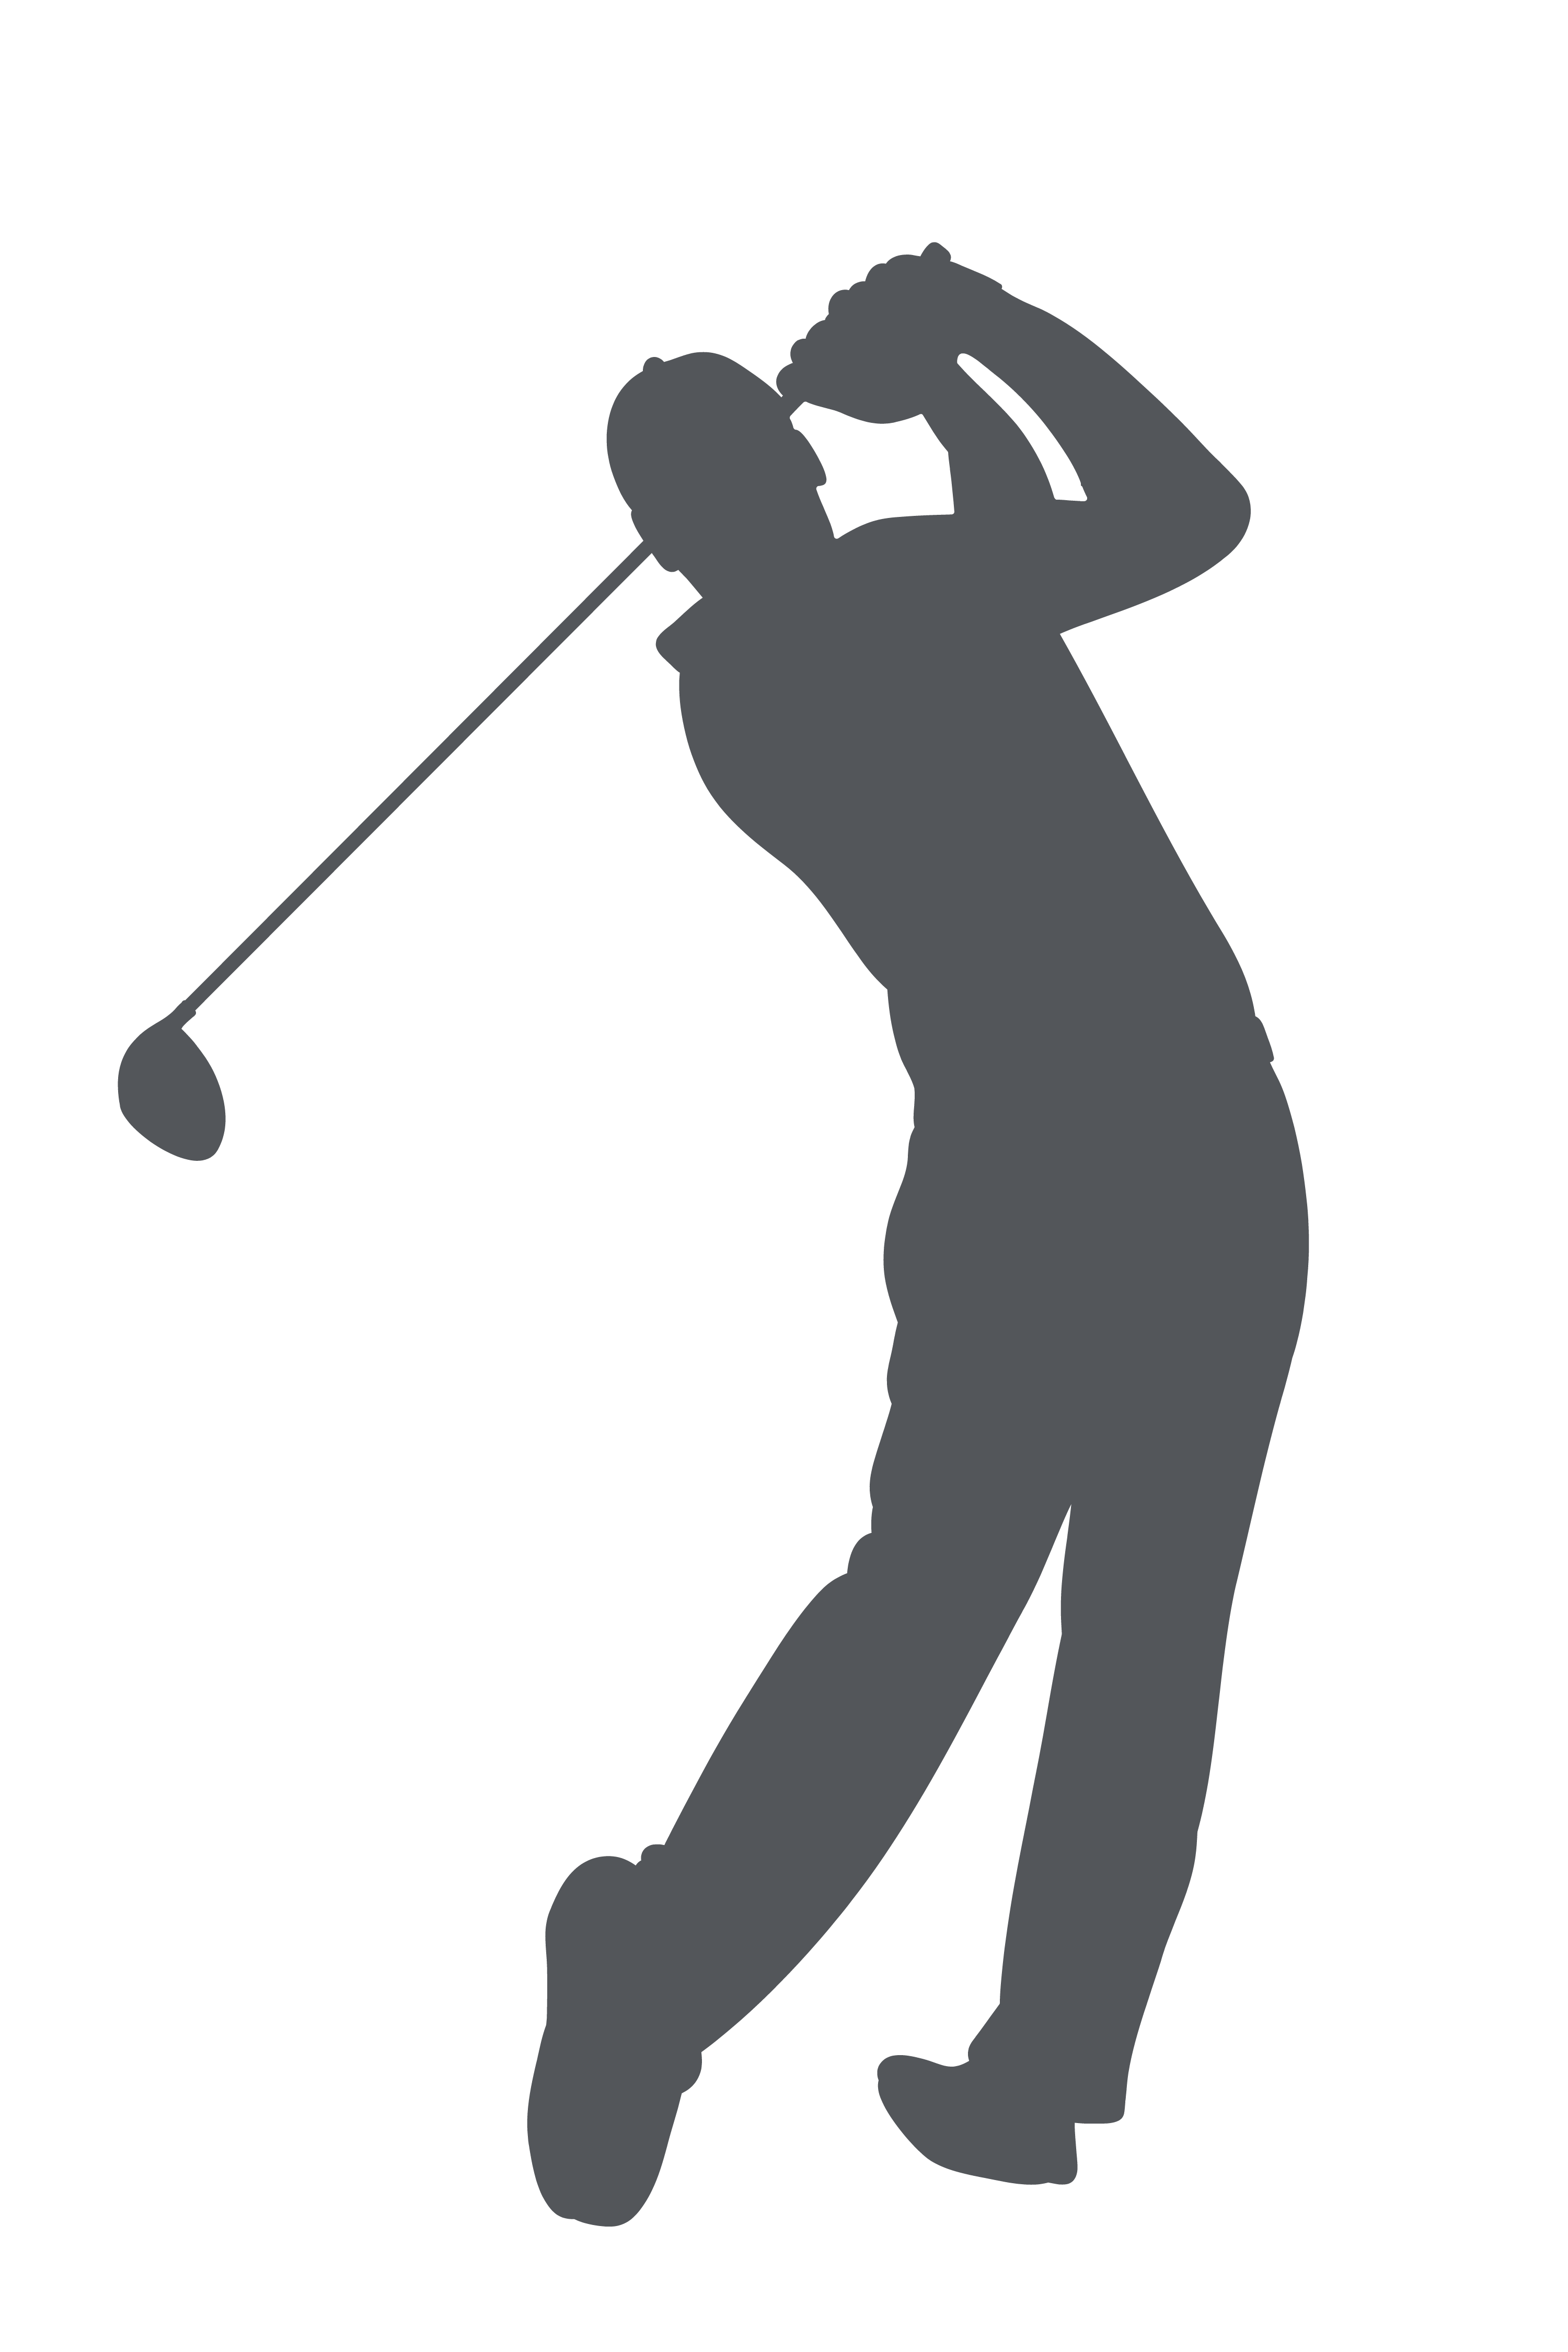 Shadow/silhouette of golfer 